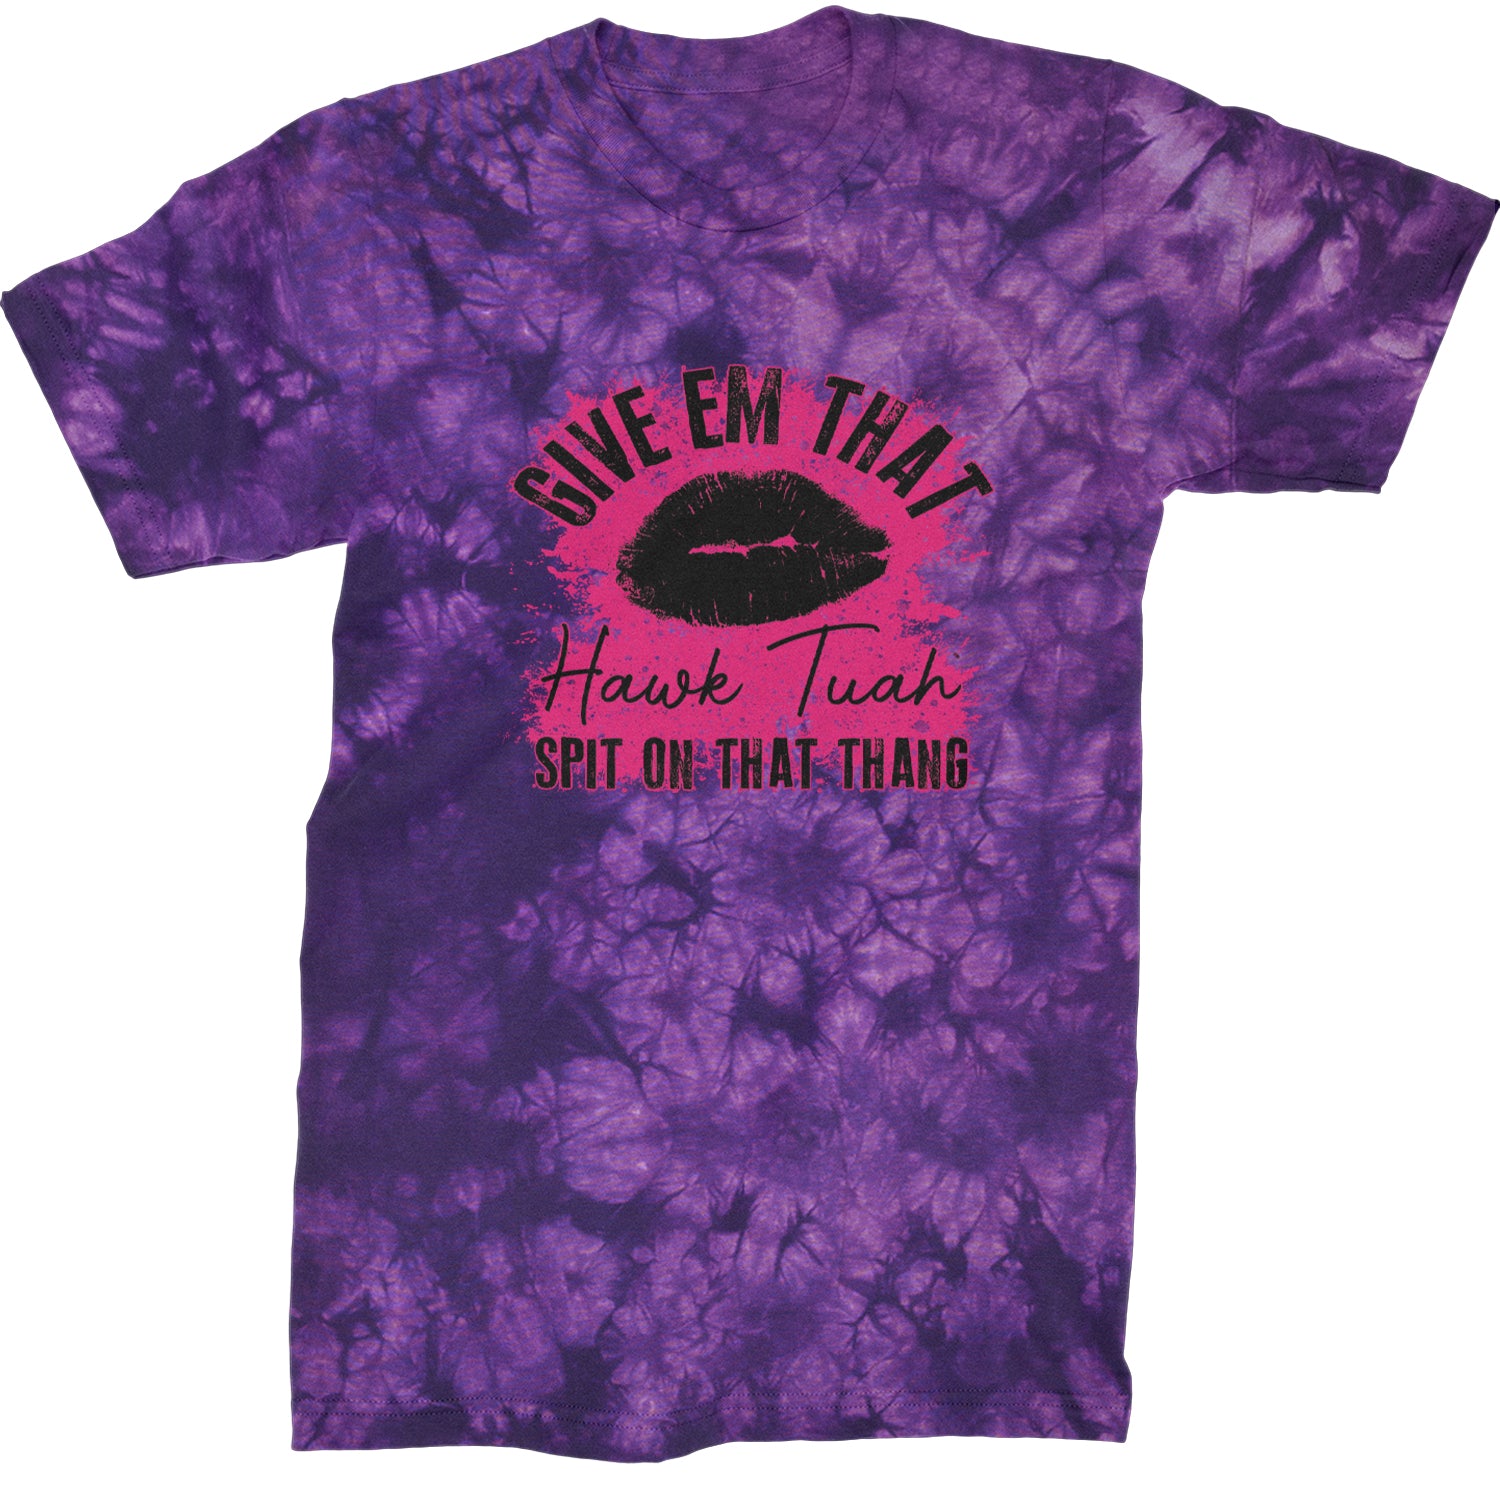 Give 'Em Hawk Tuah Spit On That Thang Mens T-shirt Tie-Dye Crystal Purple